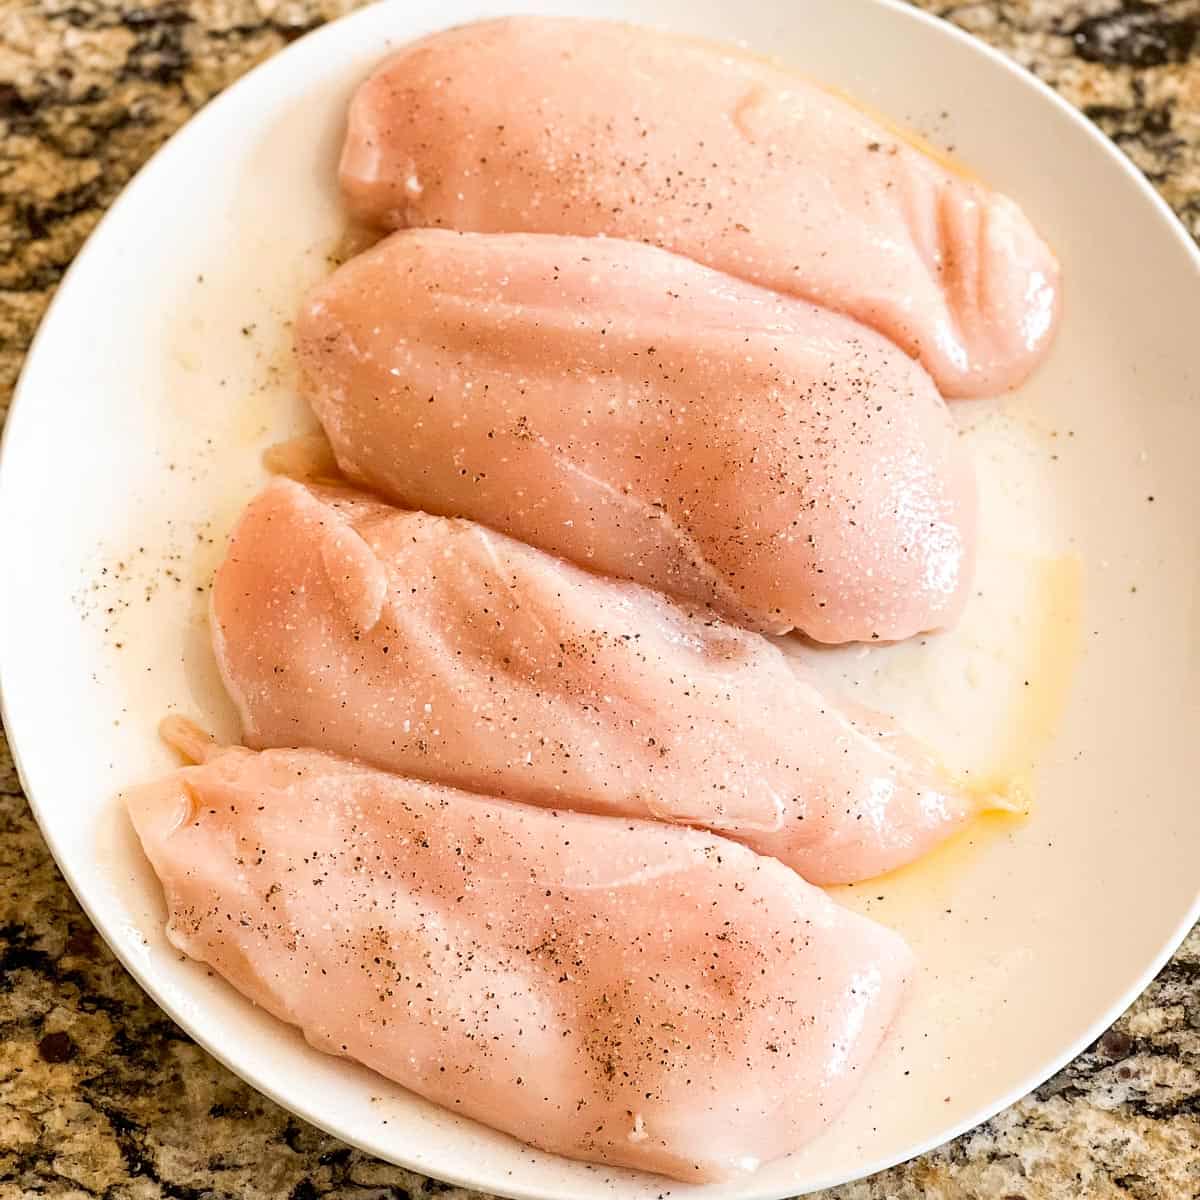 4 seasoned boneless, skinless chicken breast filets on a white plate.